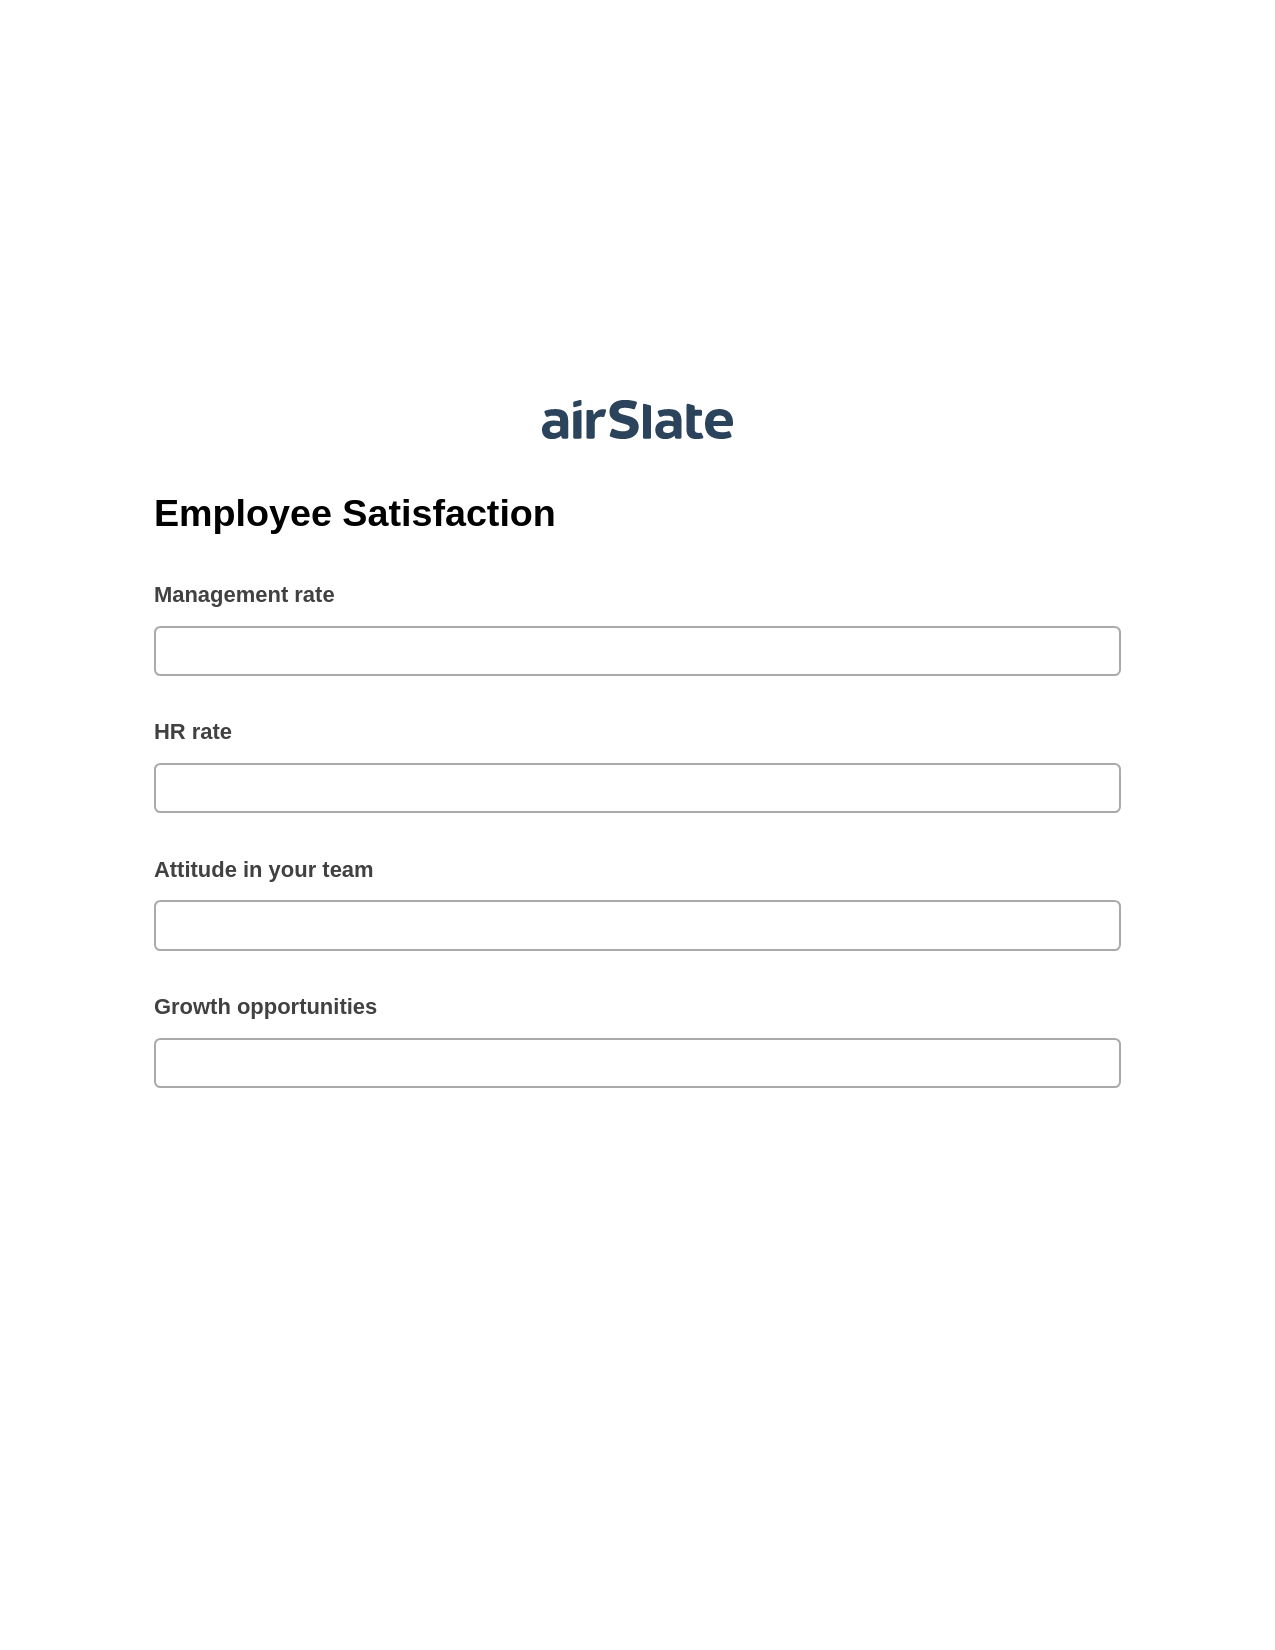 Employee Satisfaction Pre-fill from MySQL Bot, Update NetSuite Records Bot, Google Drive Bot